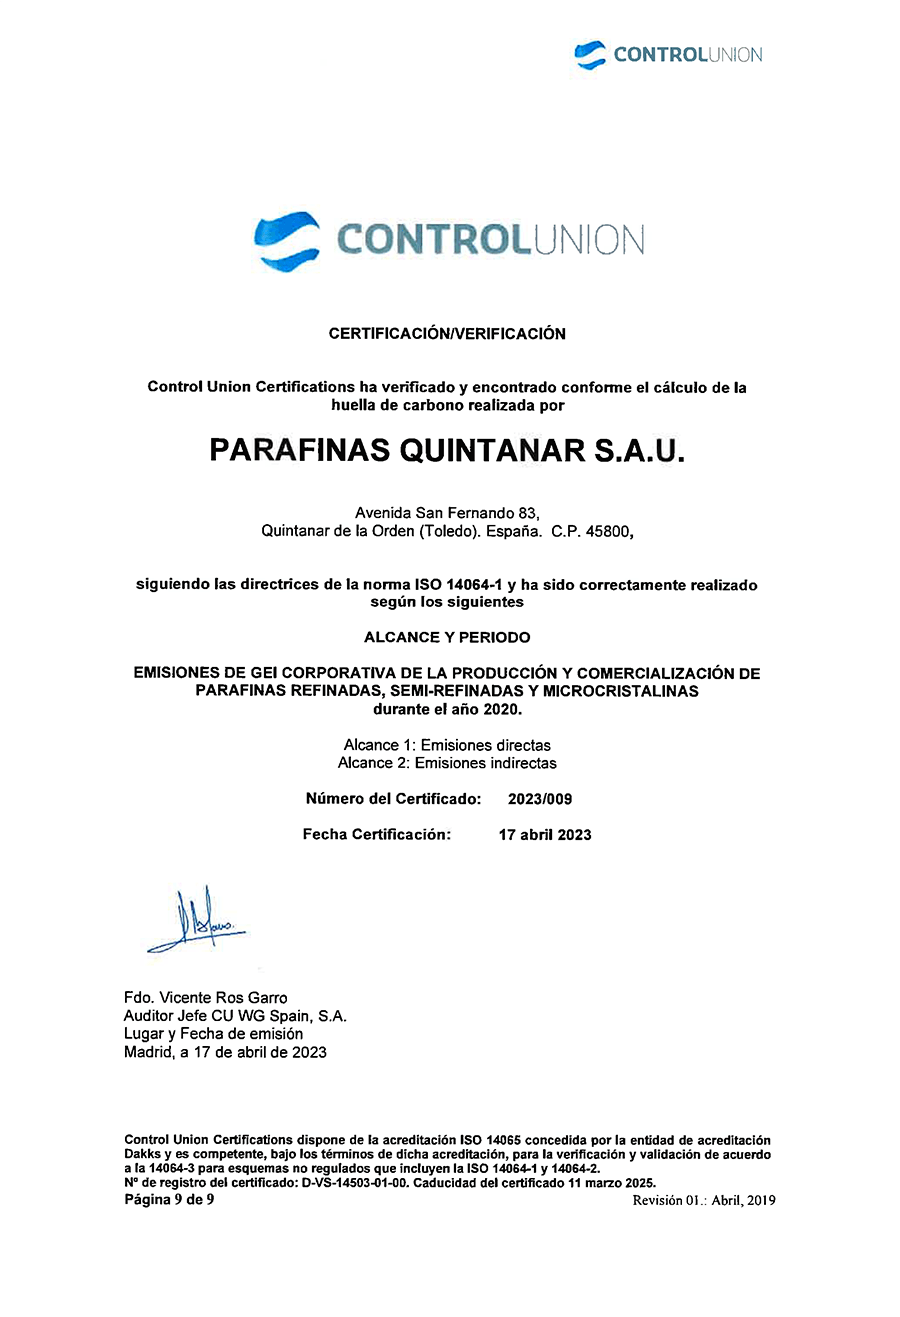 ControlUnion ISO 14064-1 